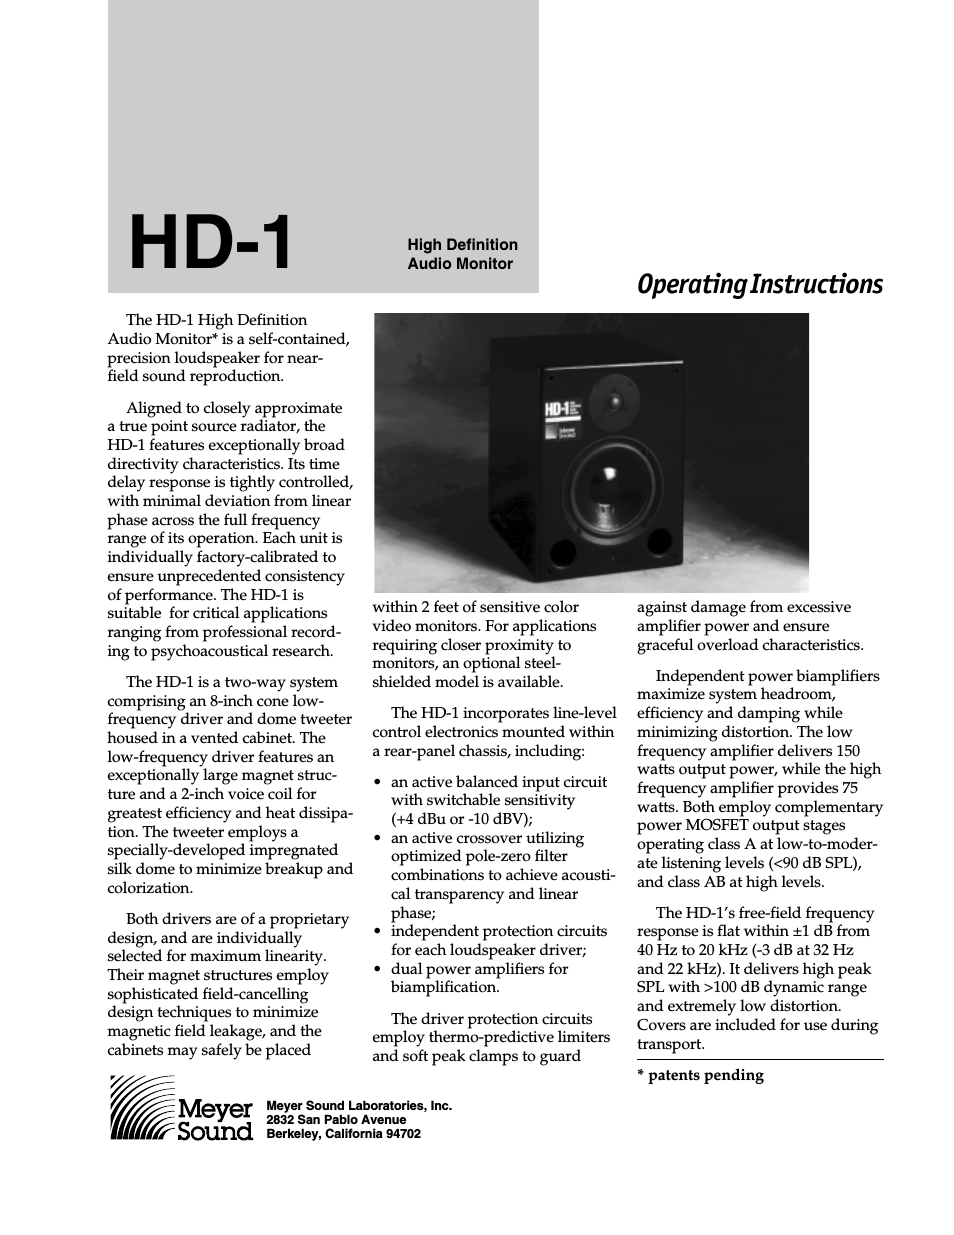 HIGH DEFINITION AUDIO MONITOR HD-1